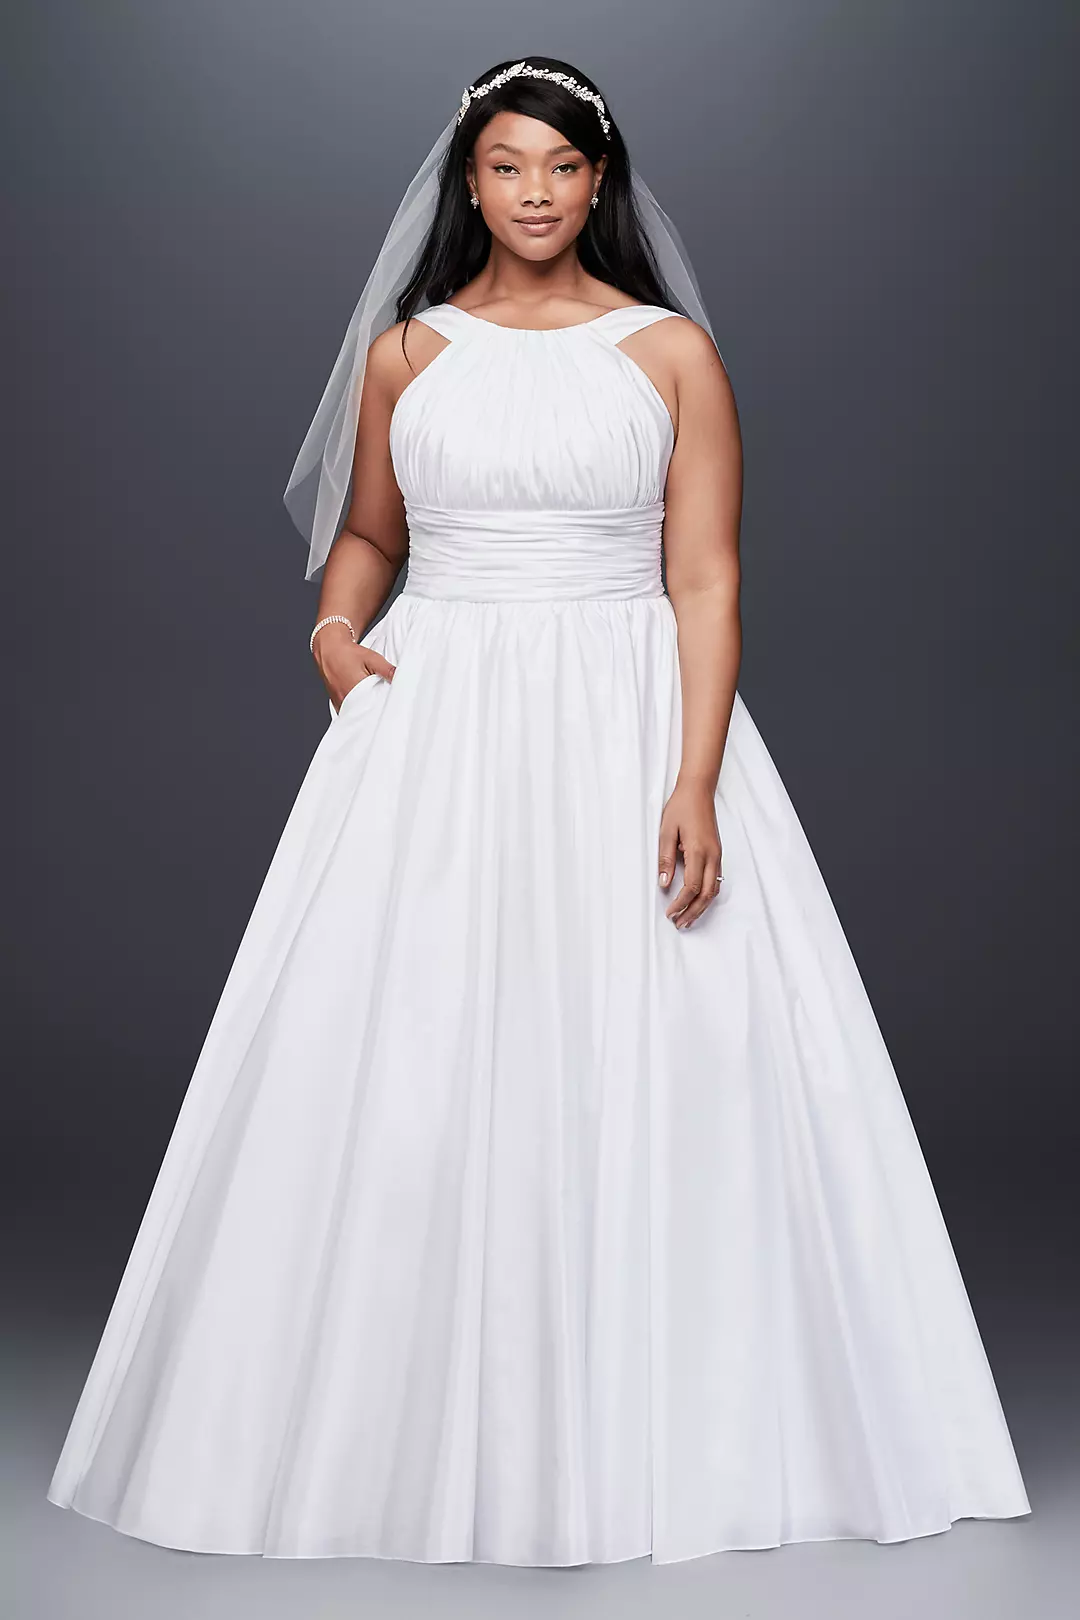 High-Neck Taffeta Plus Size Wedding Ball Gown Image